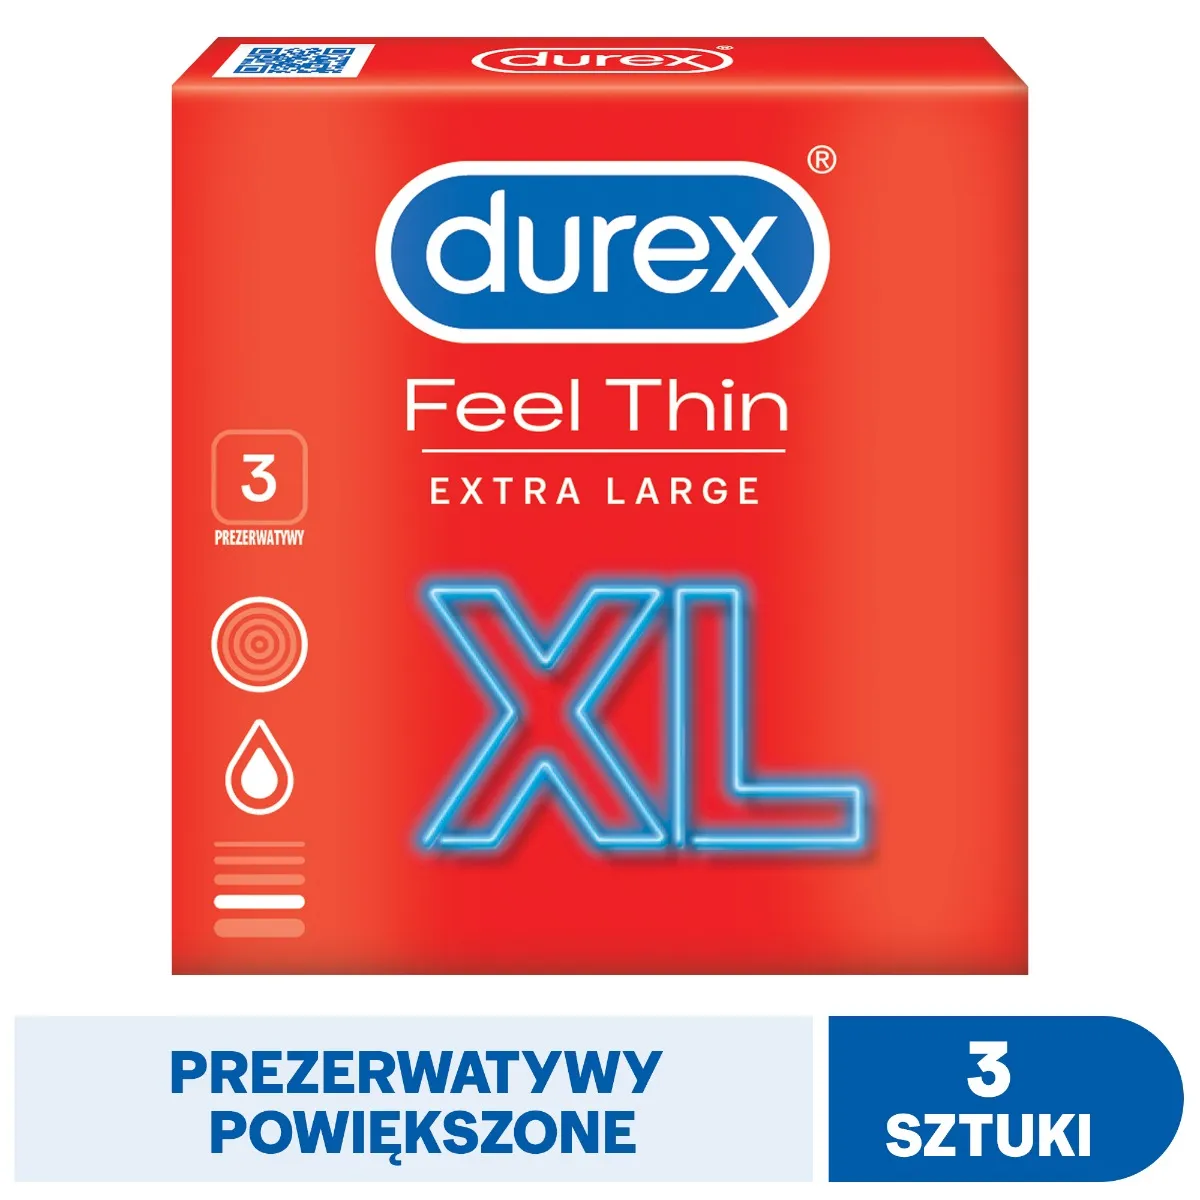 Durex Feel Thin XL prezerwatywy, 3 szt.